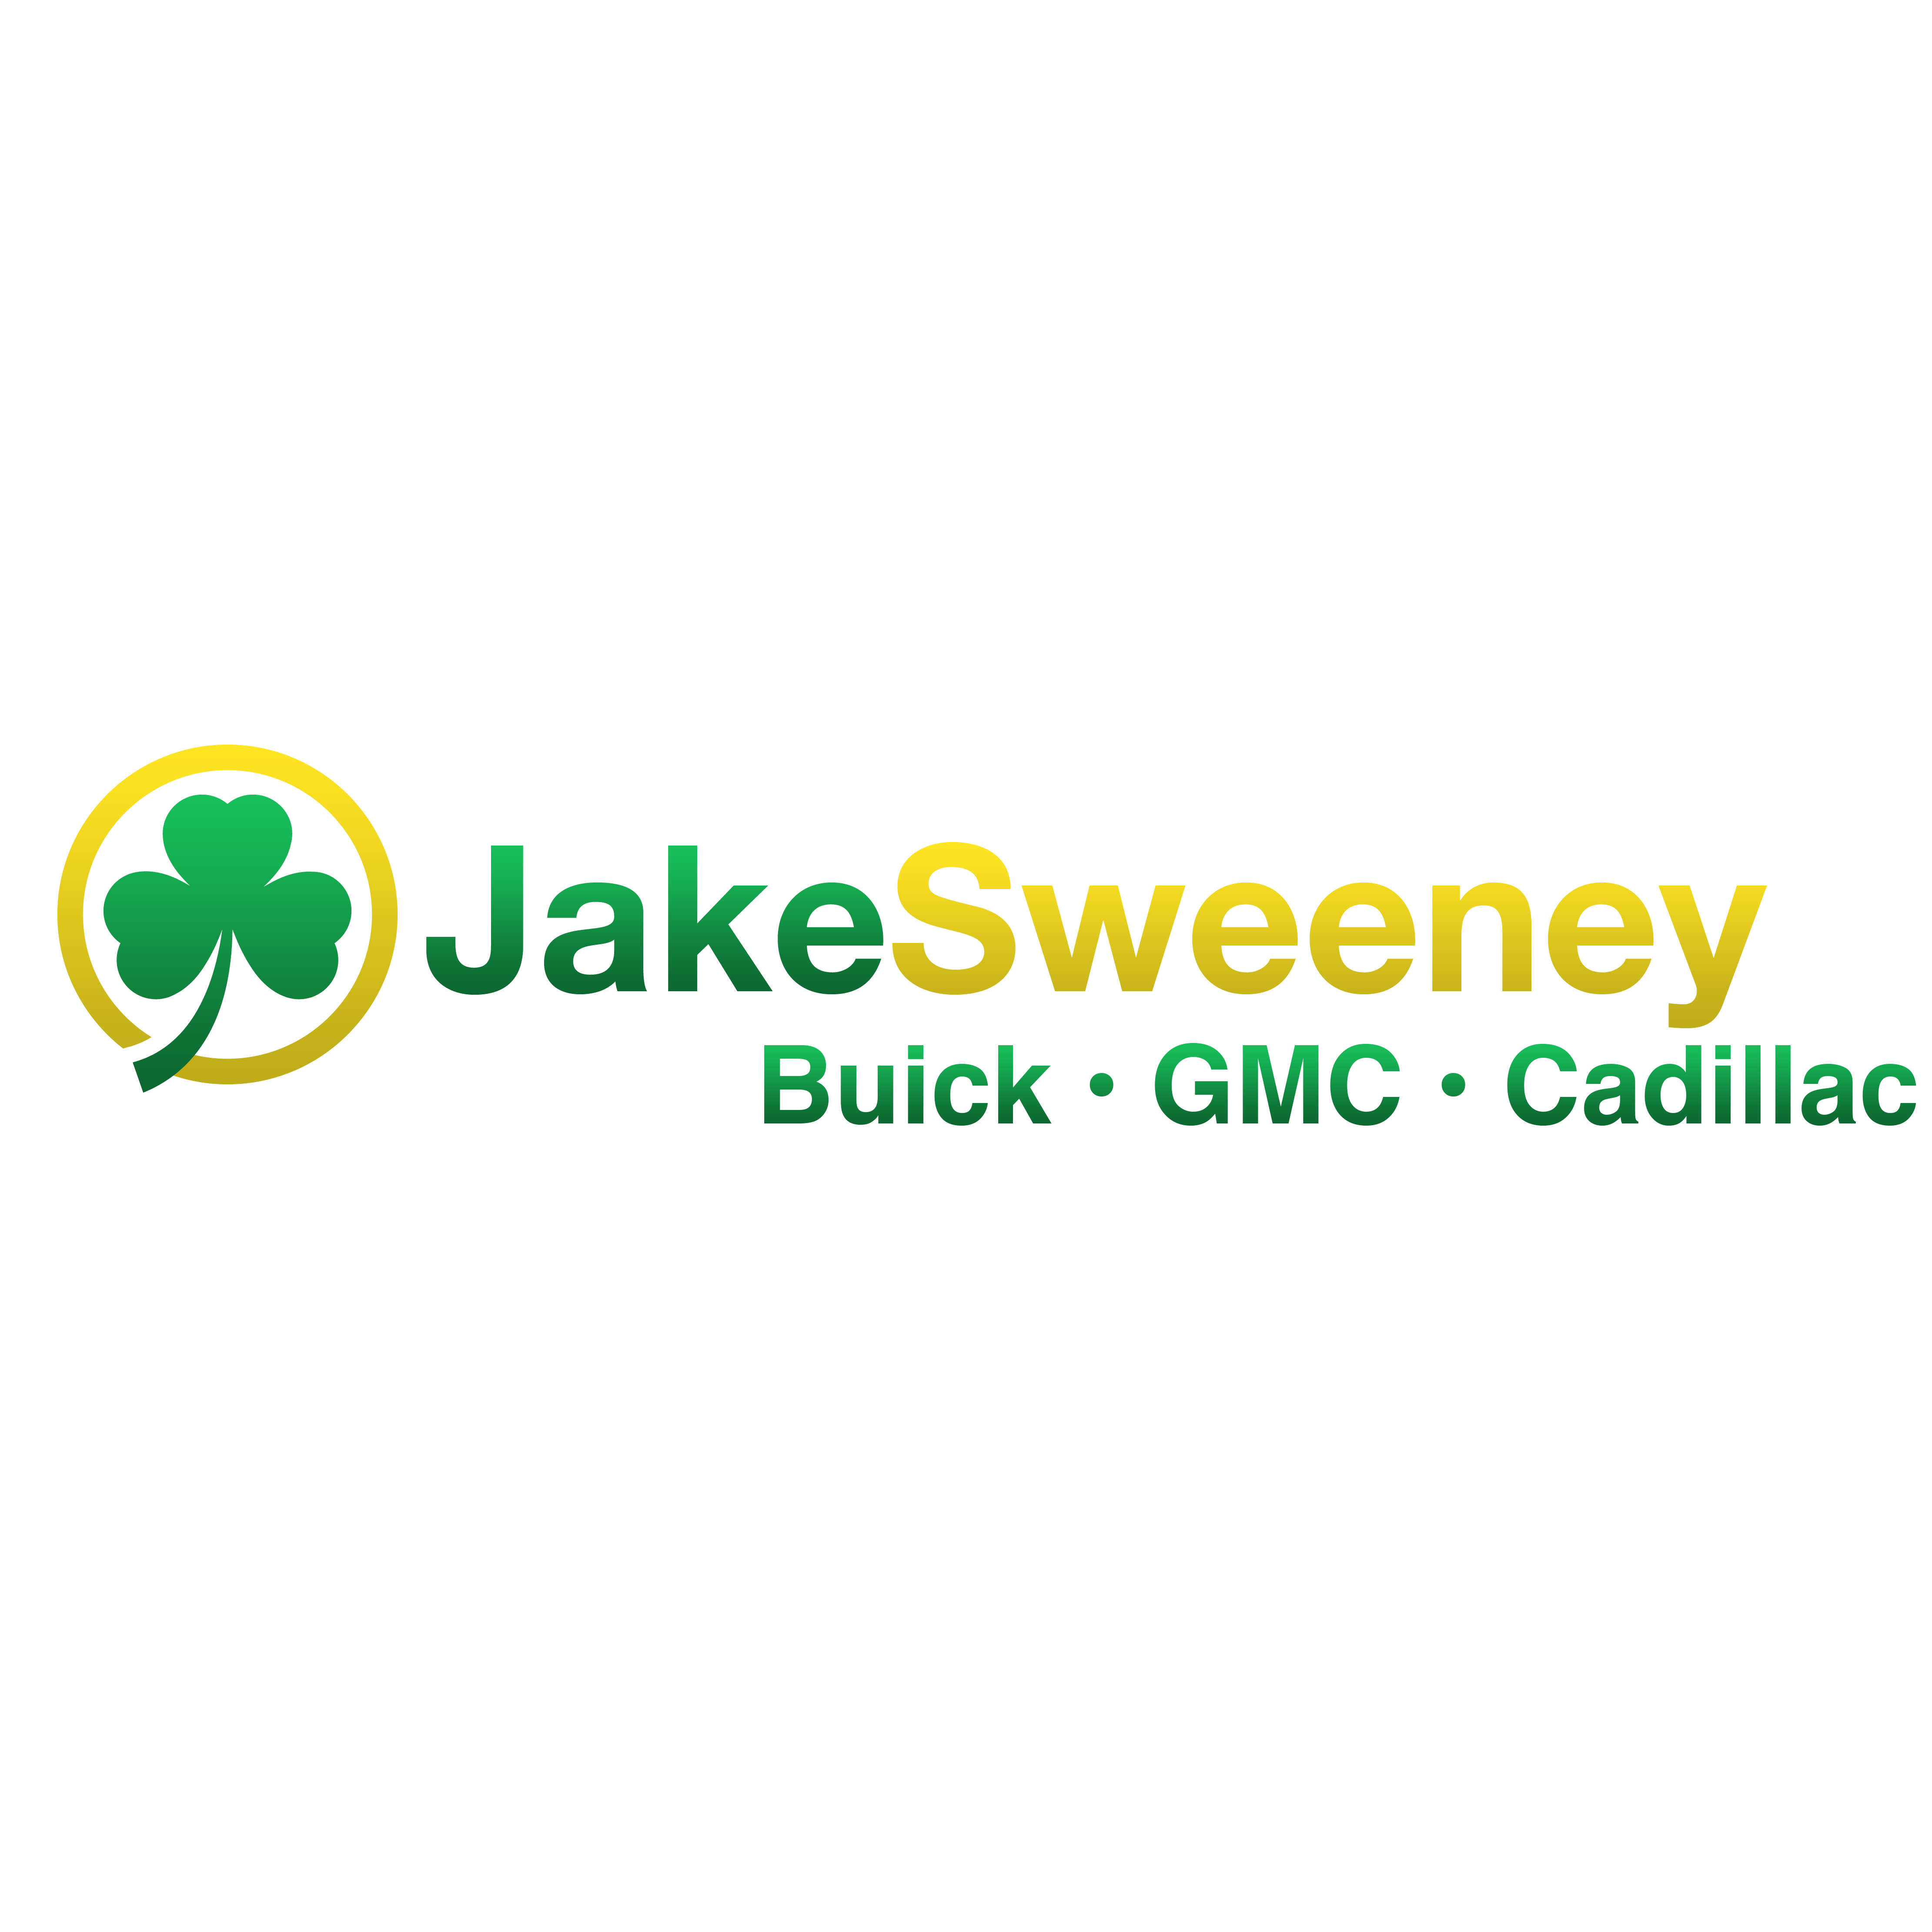 Jake Sweeney Cadillac - Lebanon, OH 45036 - (513)932-3000 | ShowMeLocal.com